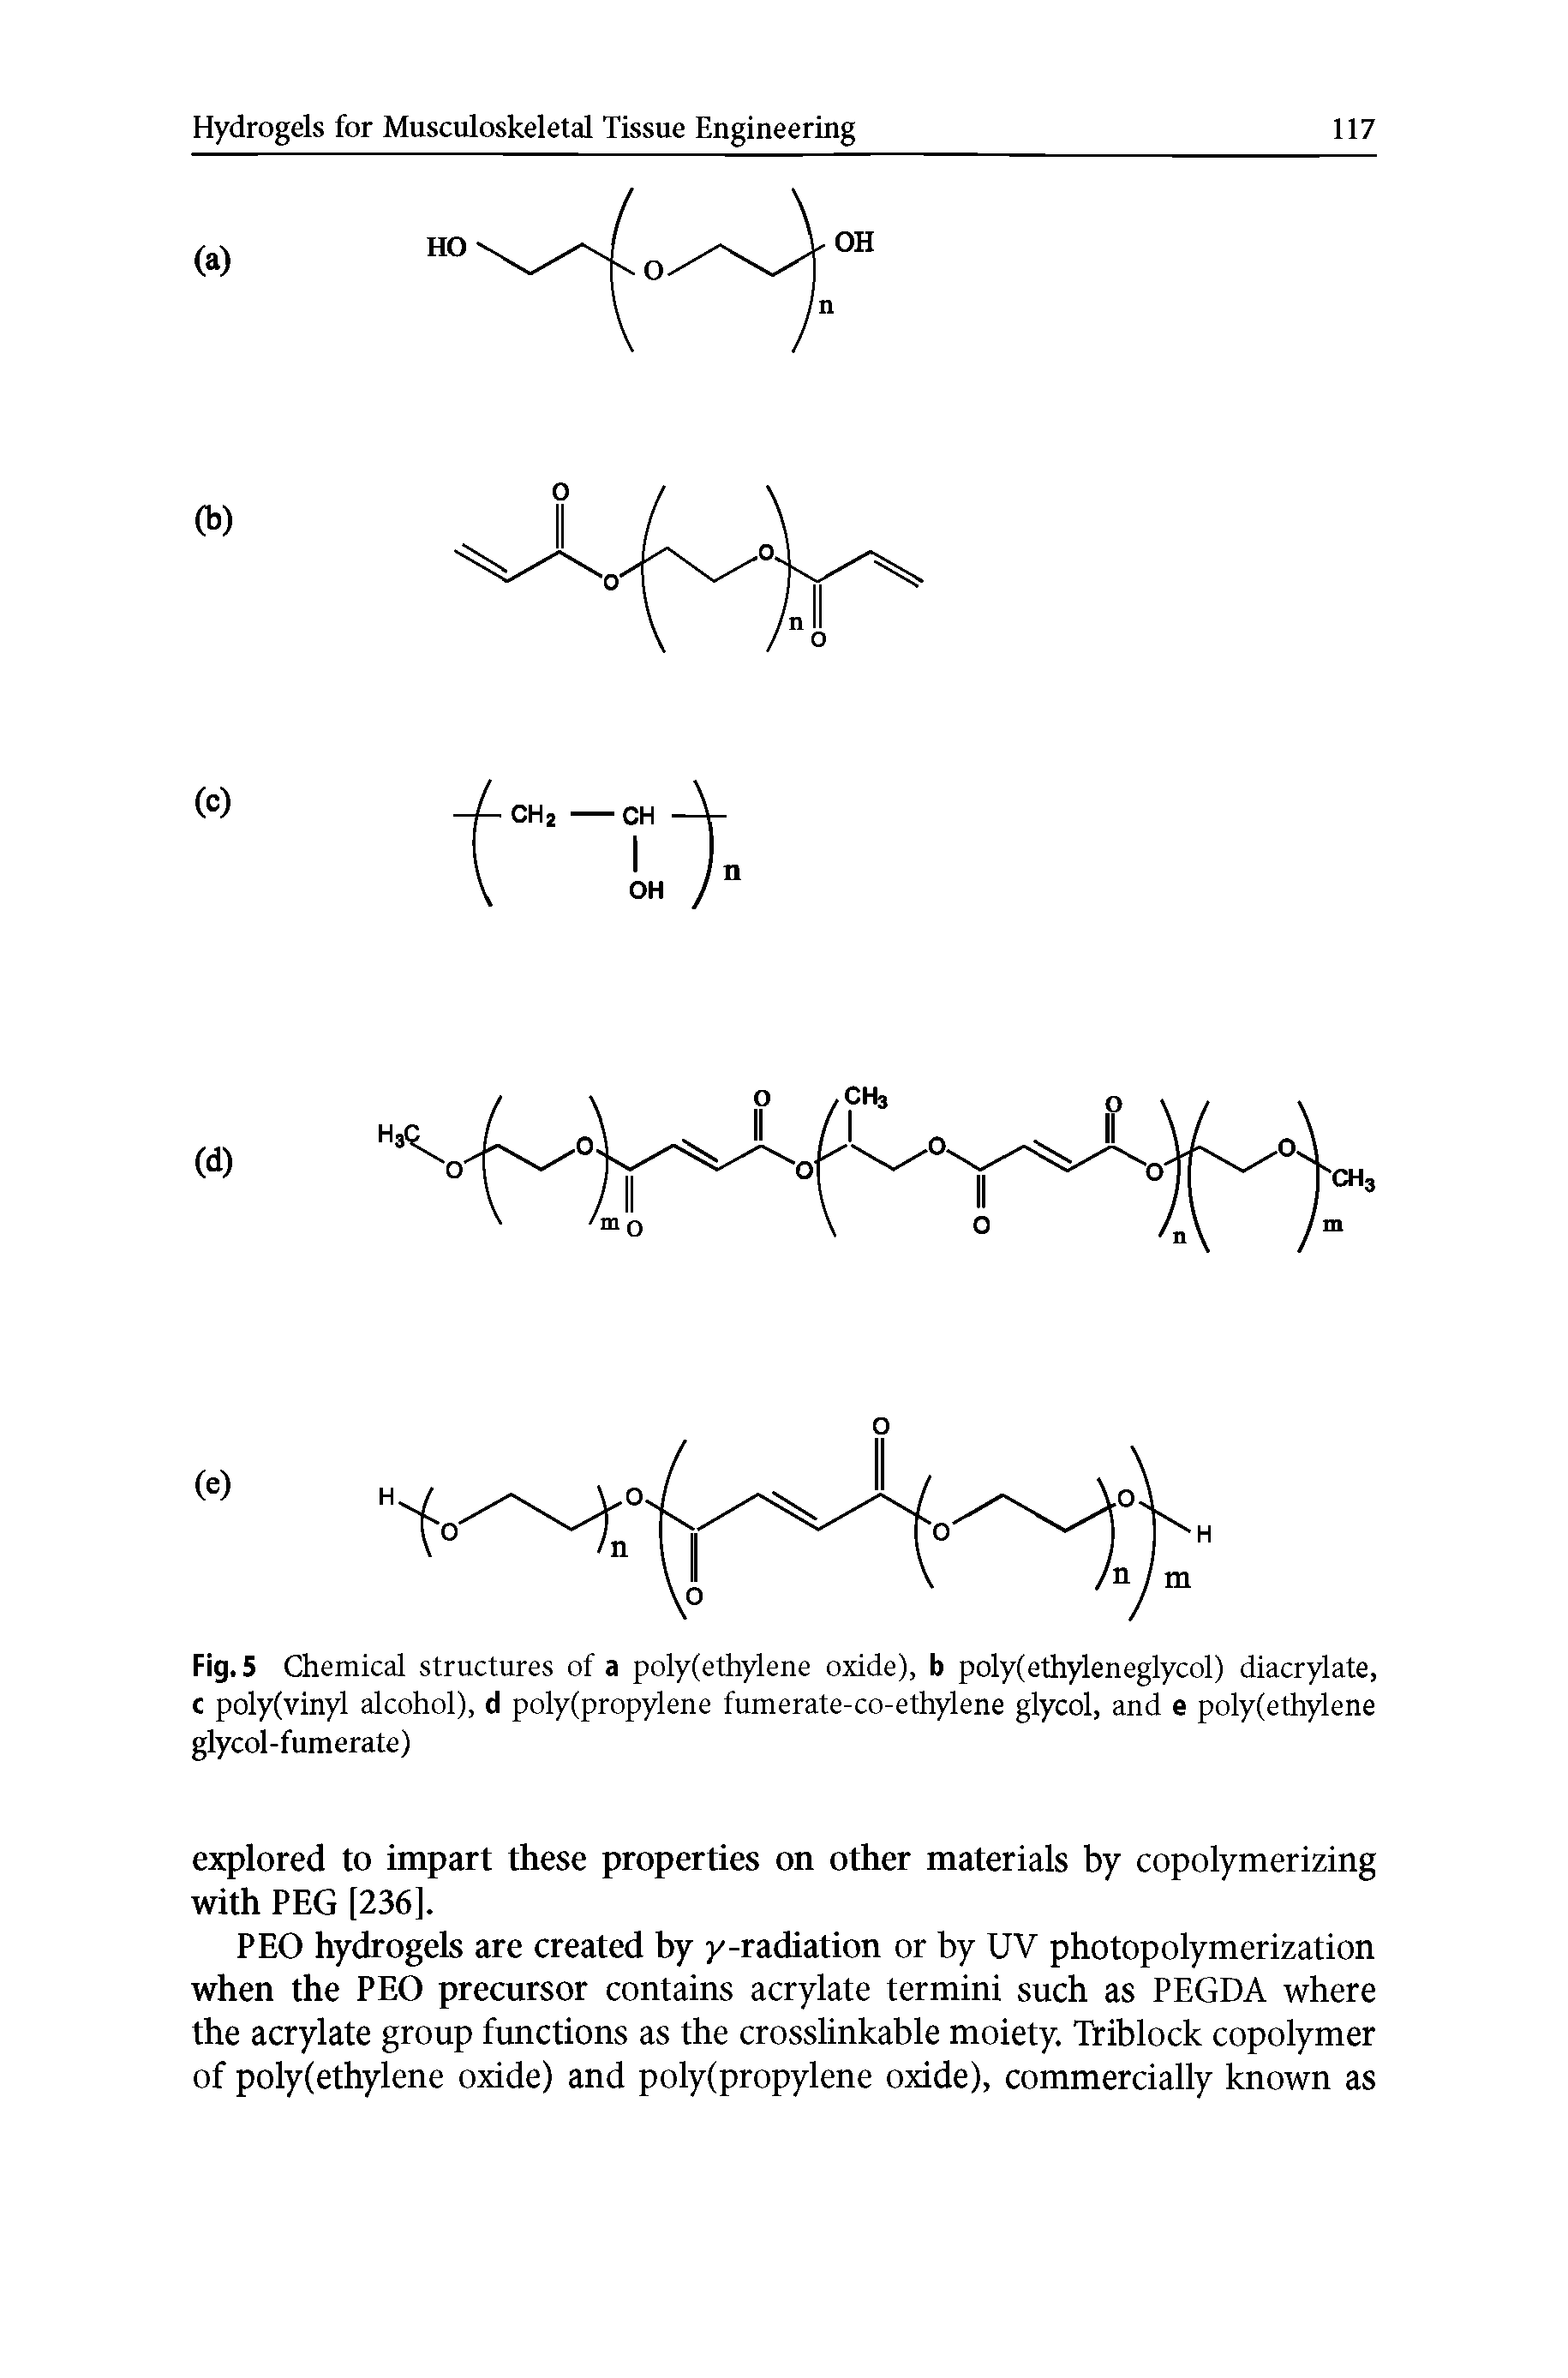 Fig. 5 Chemical structtues of a polyfethylene oxide), b poly(ethyleneglycol) diacrylate, c poly(vinyl alcohol), d polyfpropylene fiunerate-co-ethylene glycol, and e polyfethylene glycol-fumerate)...